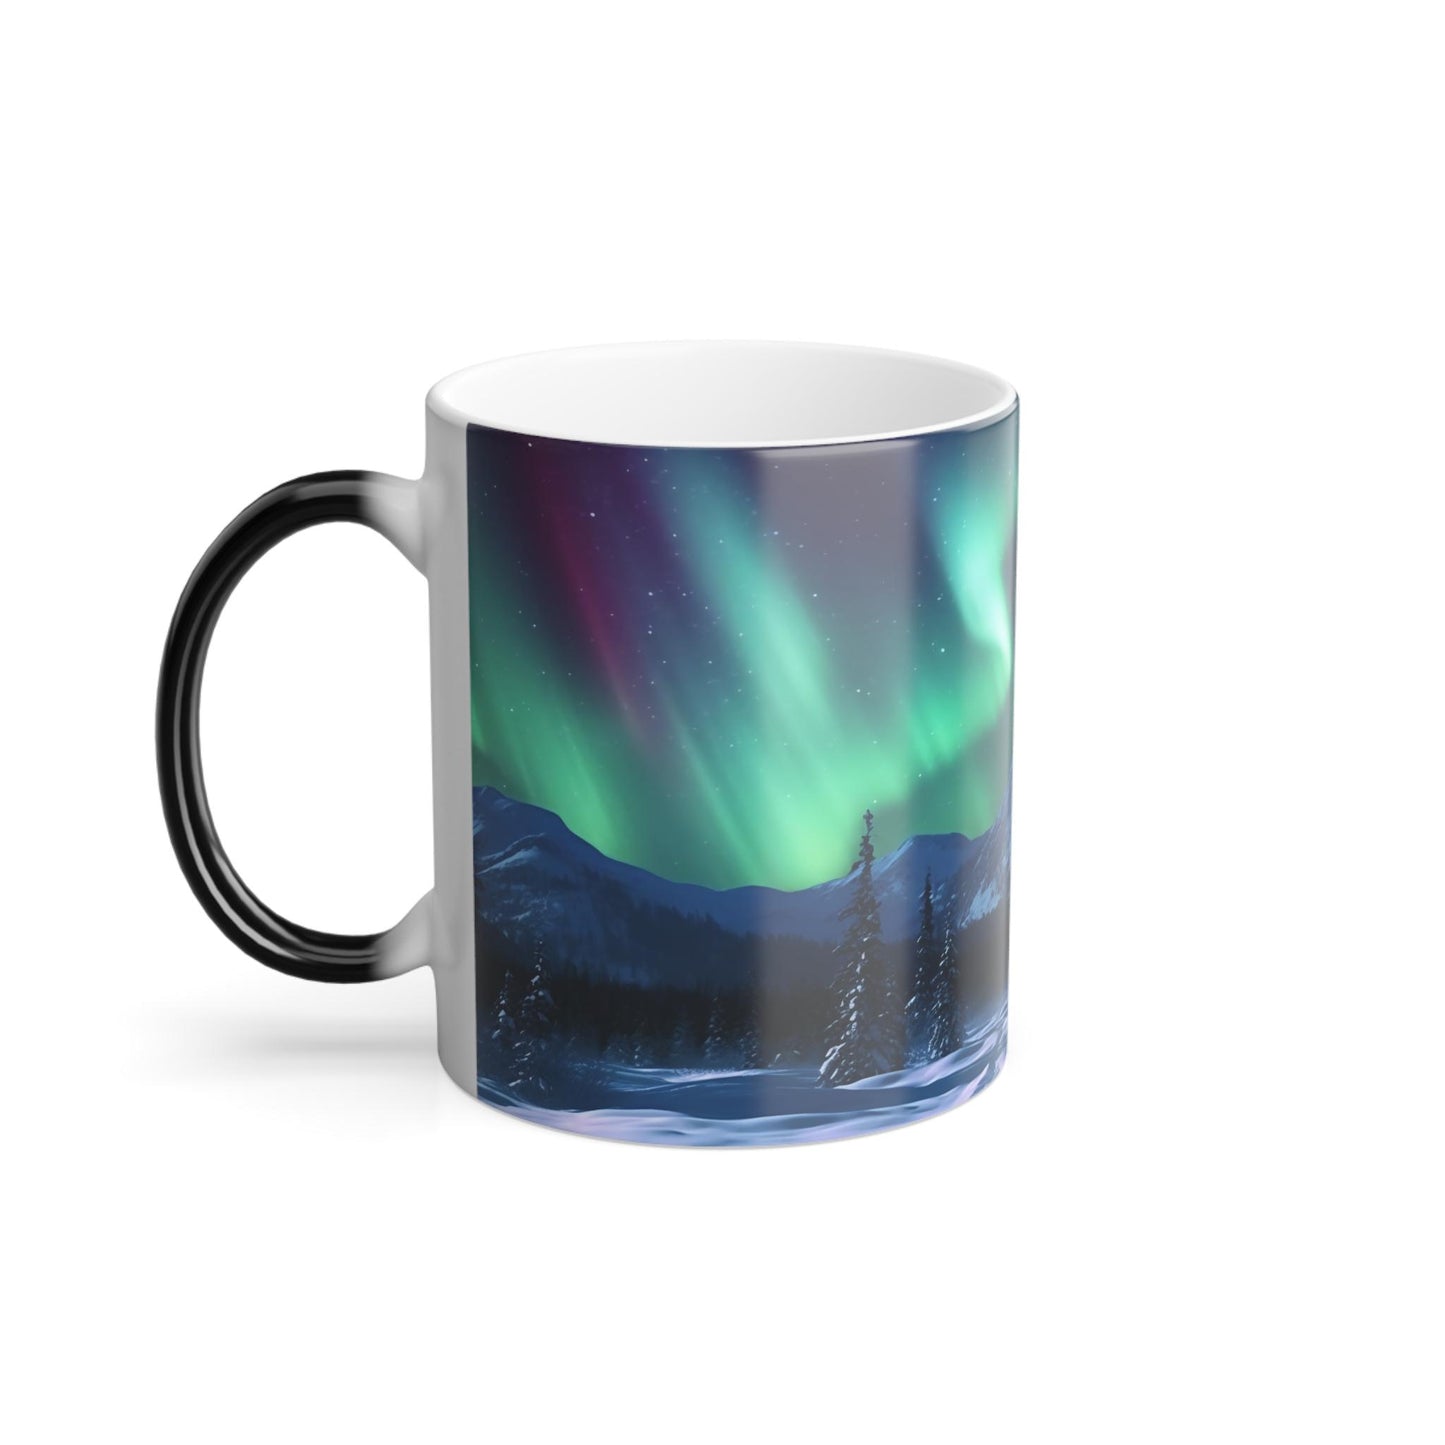 Enchanting Aurora Borealis Heat Sensitive Mug - Northern Lights Magic Color Morphing Mug 11oz - Heat Reactive Night Sky Coffee Cup - Perfect Gift for Nature Lovers 26